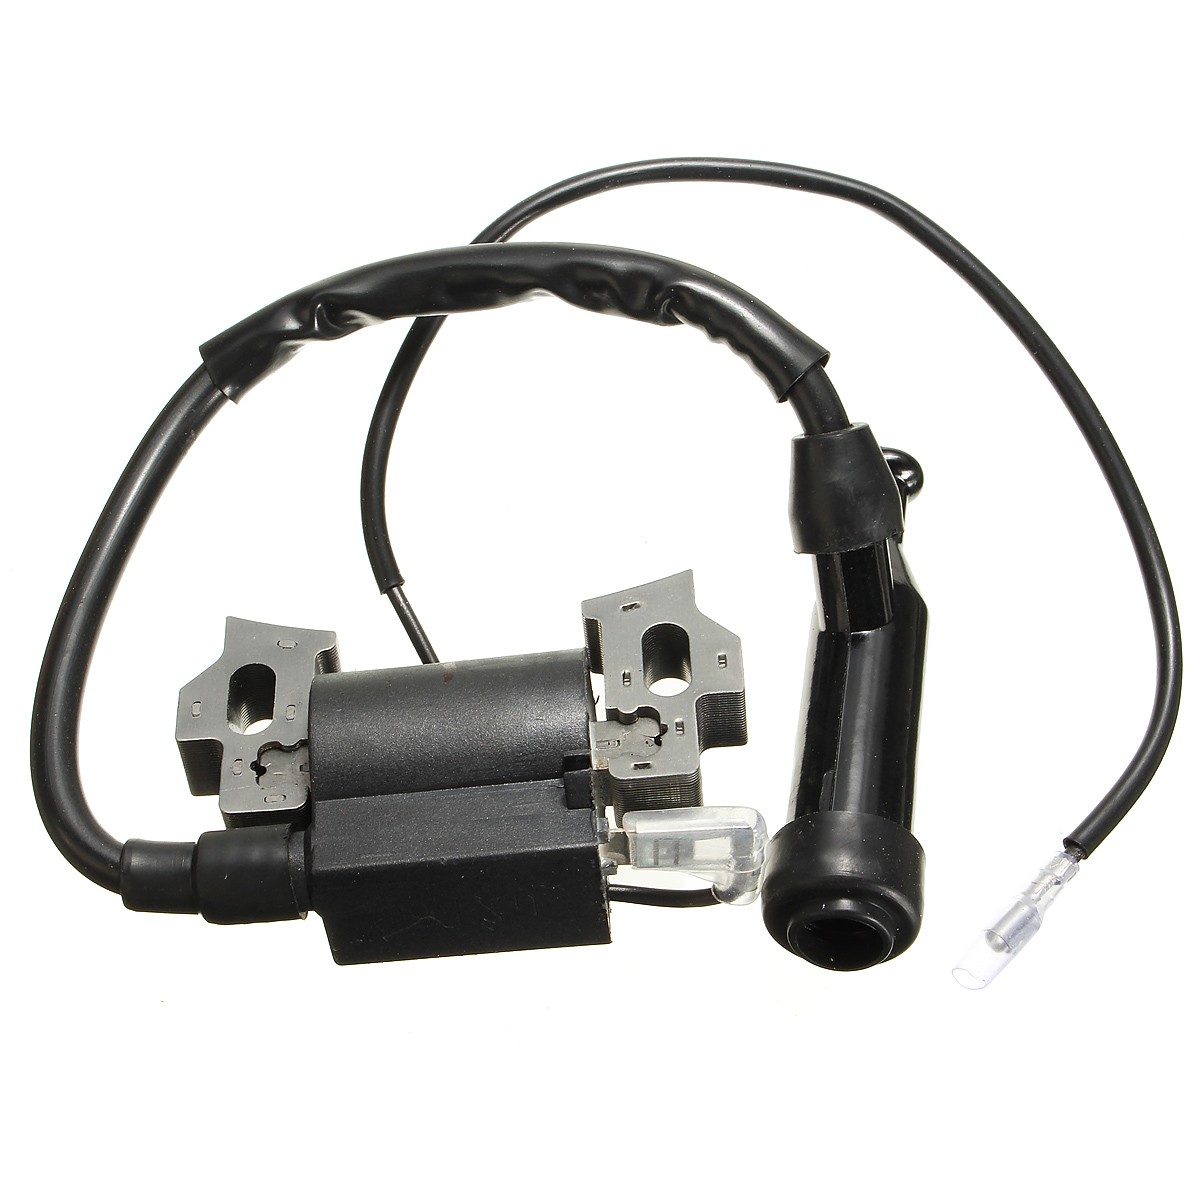 Recoil Carburetor Carb Starter Ignition Coil Spark Plug Air Filter Gas Cap For Honda GX160 5.5HP Engine Kit